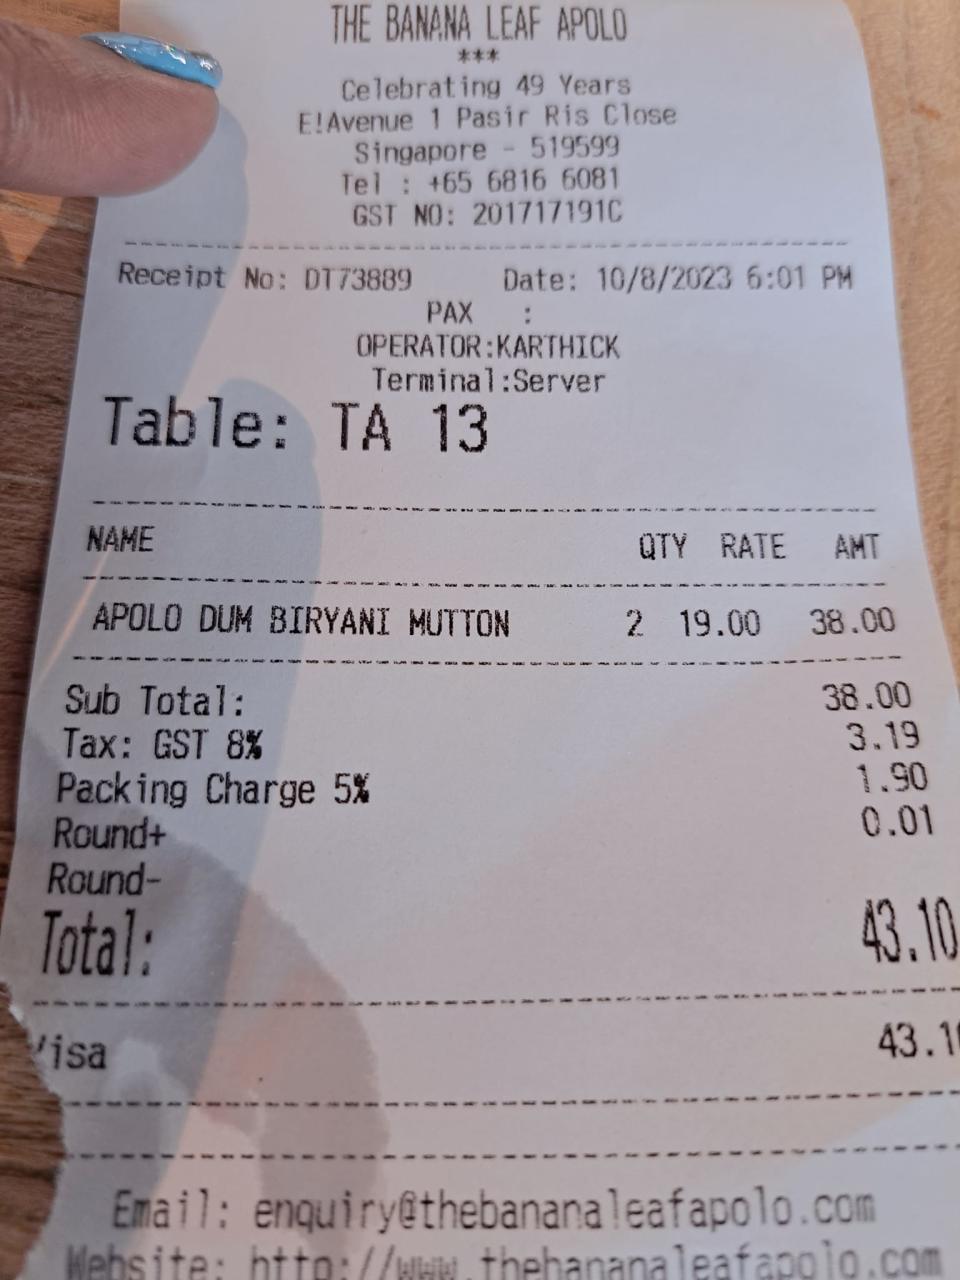 Banana Leaf Apolo - Takeaway receipt